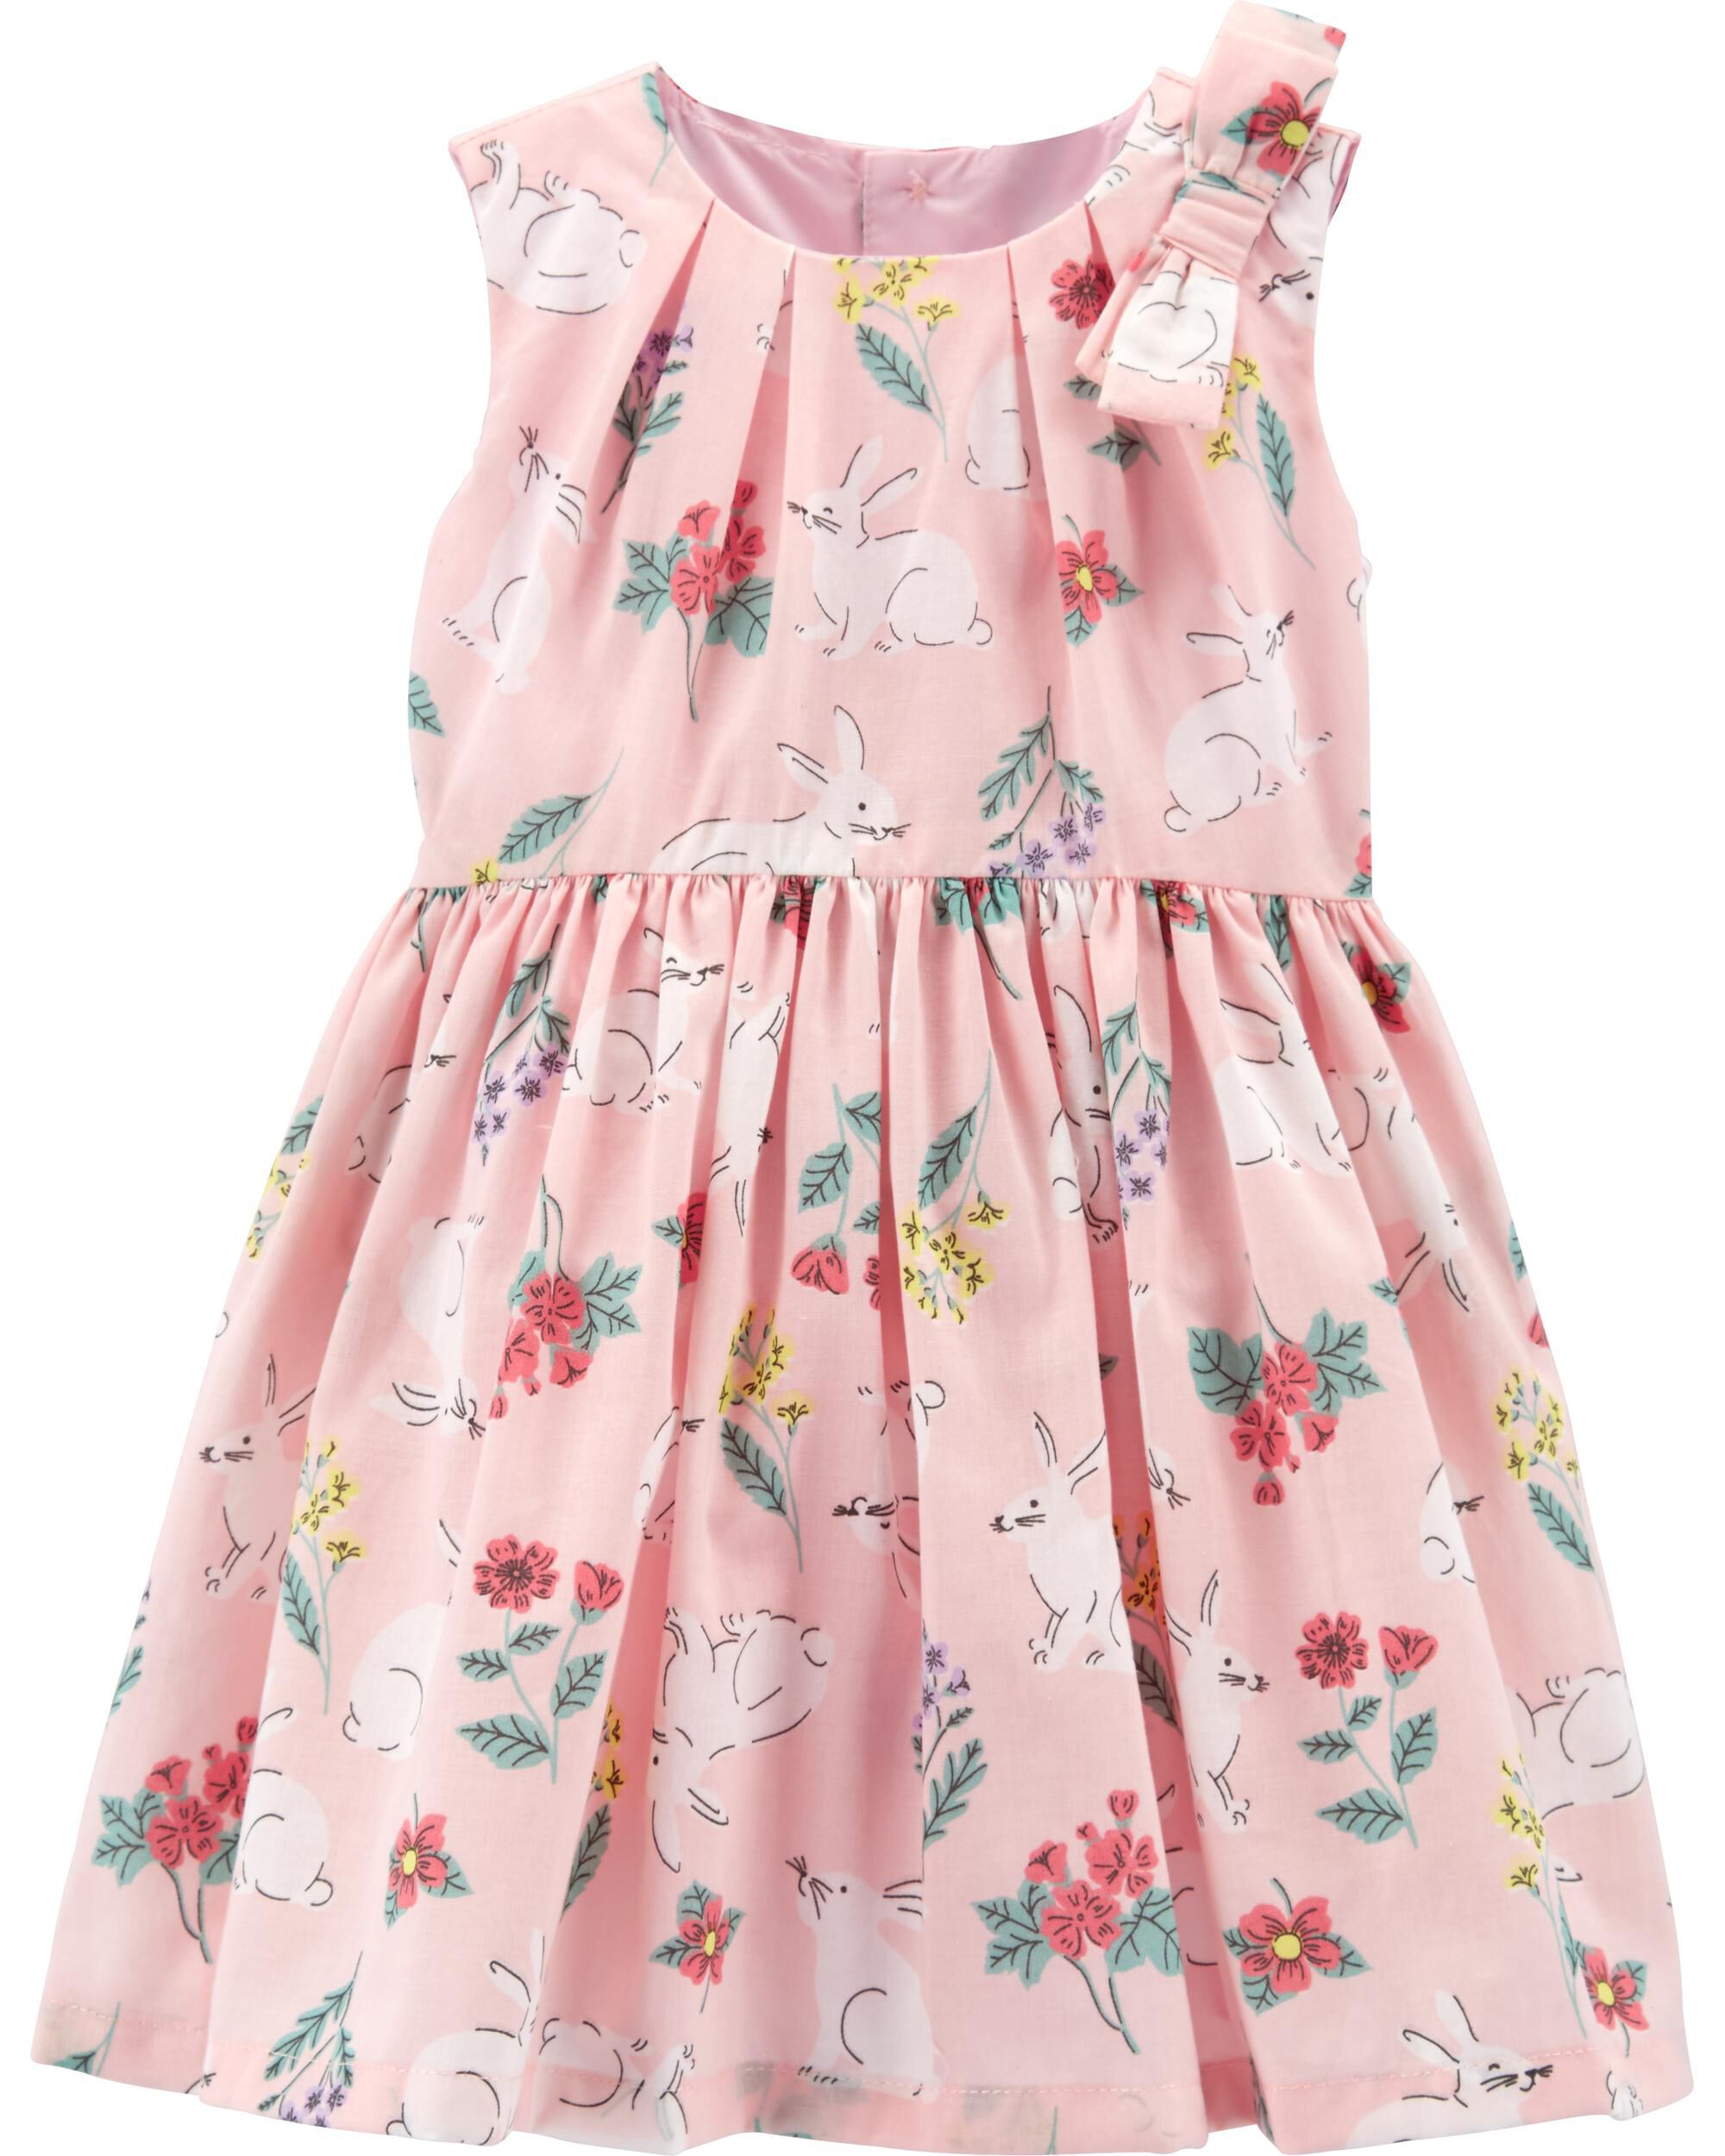 Floral Bunny Dress | carters.com